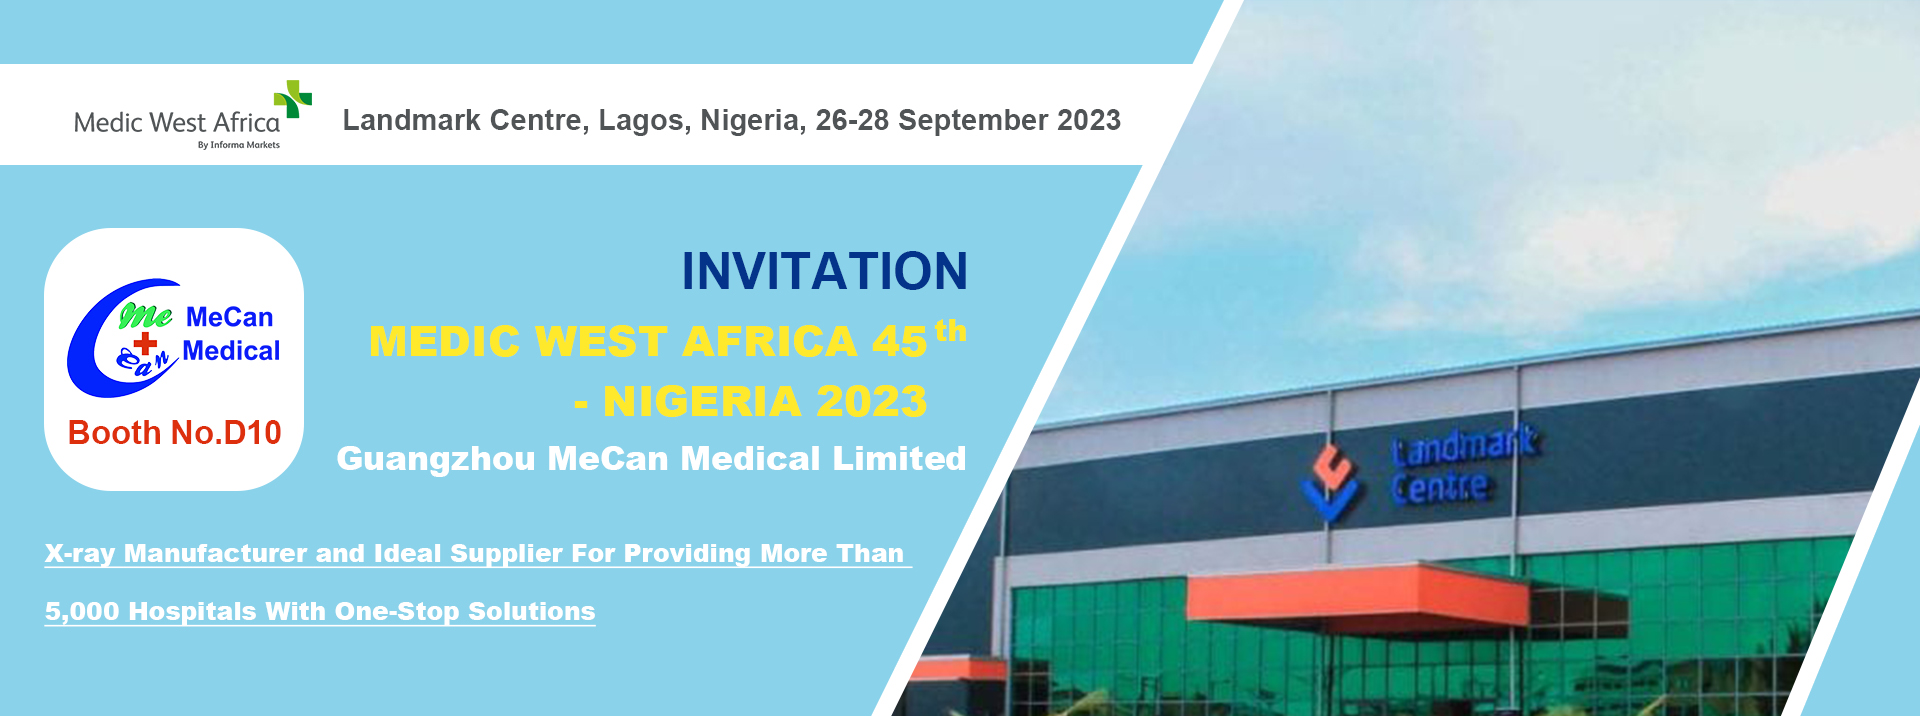 MeCan Medical at Medic West Africa 45th in Nigeria